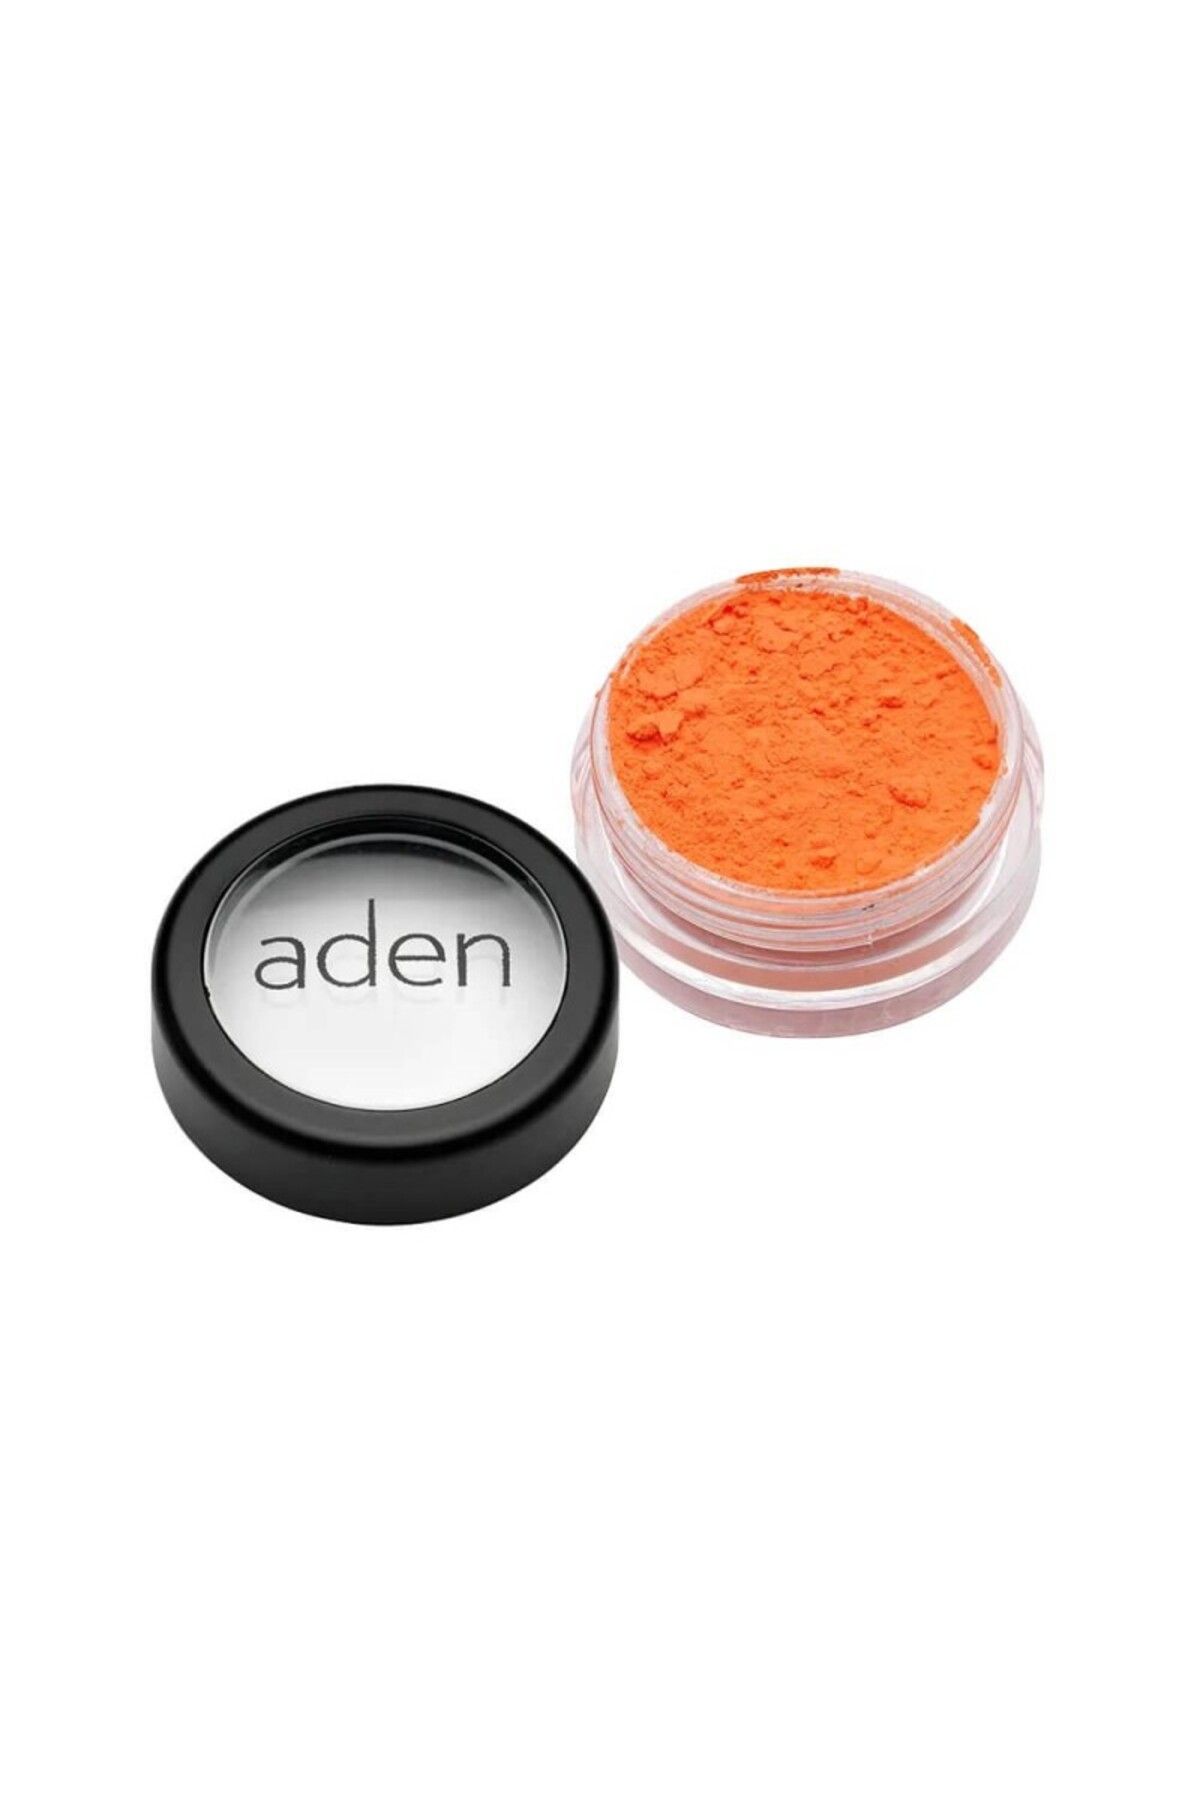 Aden Pigment Powder ( 33 Neon Orange )